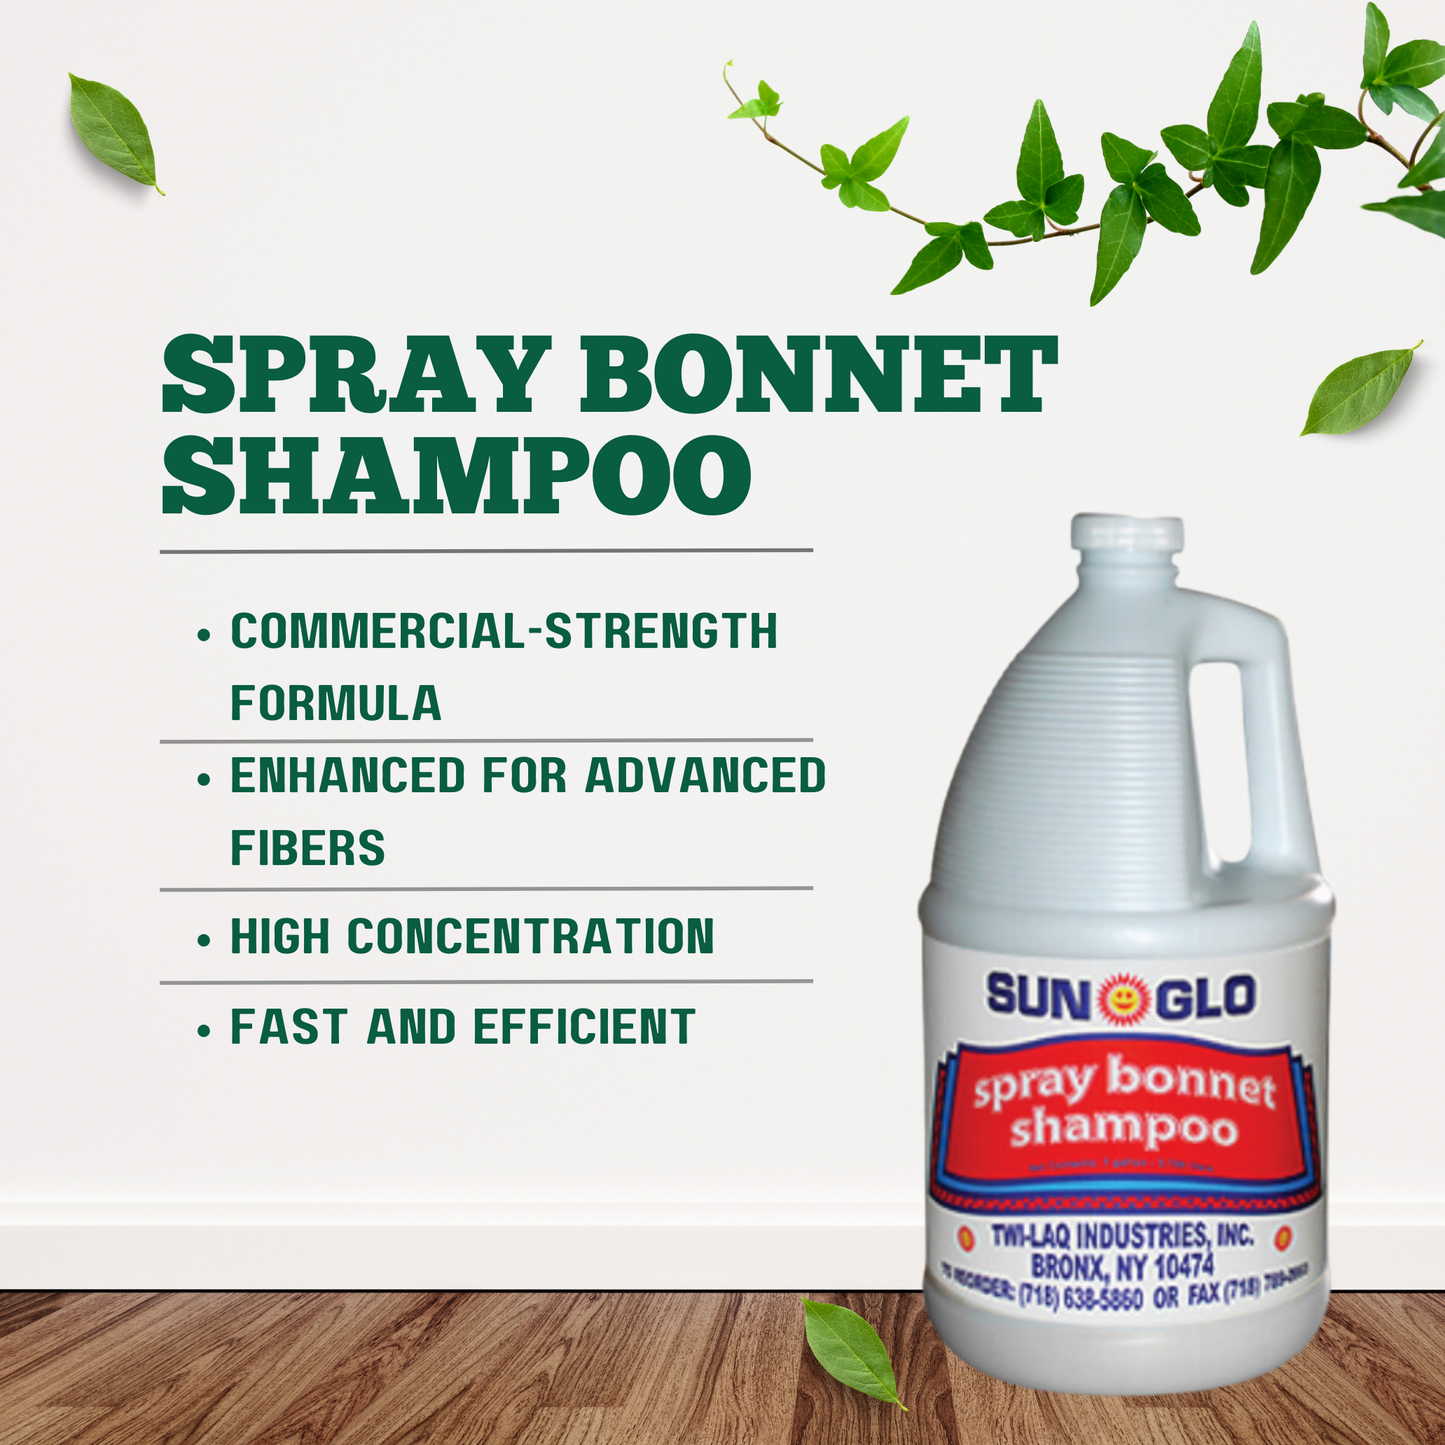 SUN-GLO Spray Bonnet Shampoo - Advanced Formula, Heavy Duty Commercial Strength, High-Performance Carpet Care - (4x1 Gallon Case)